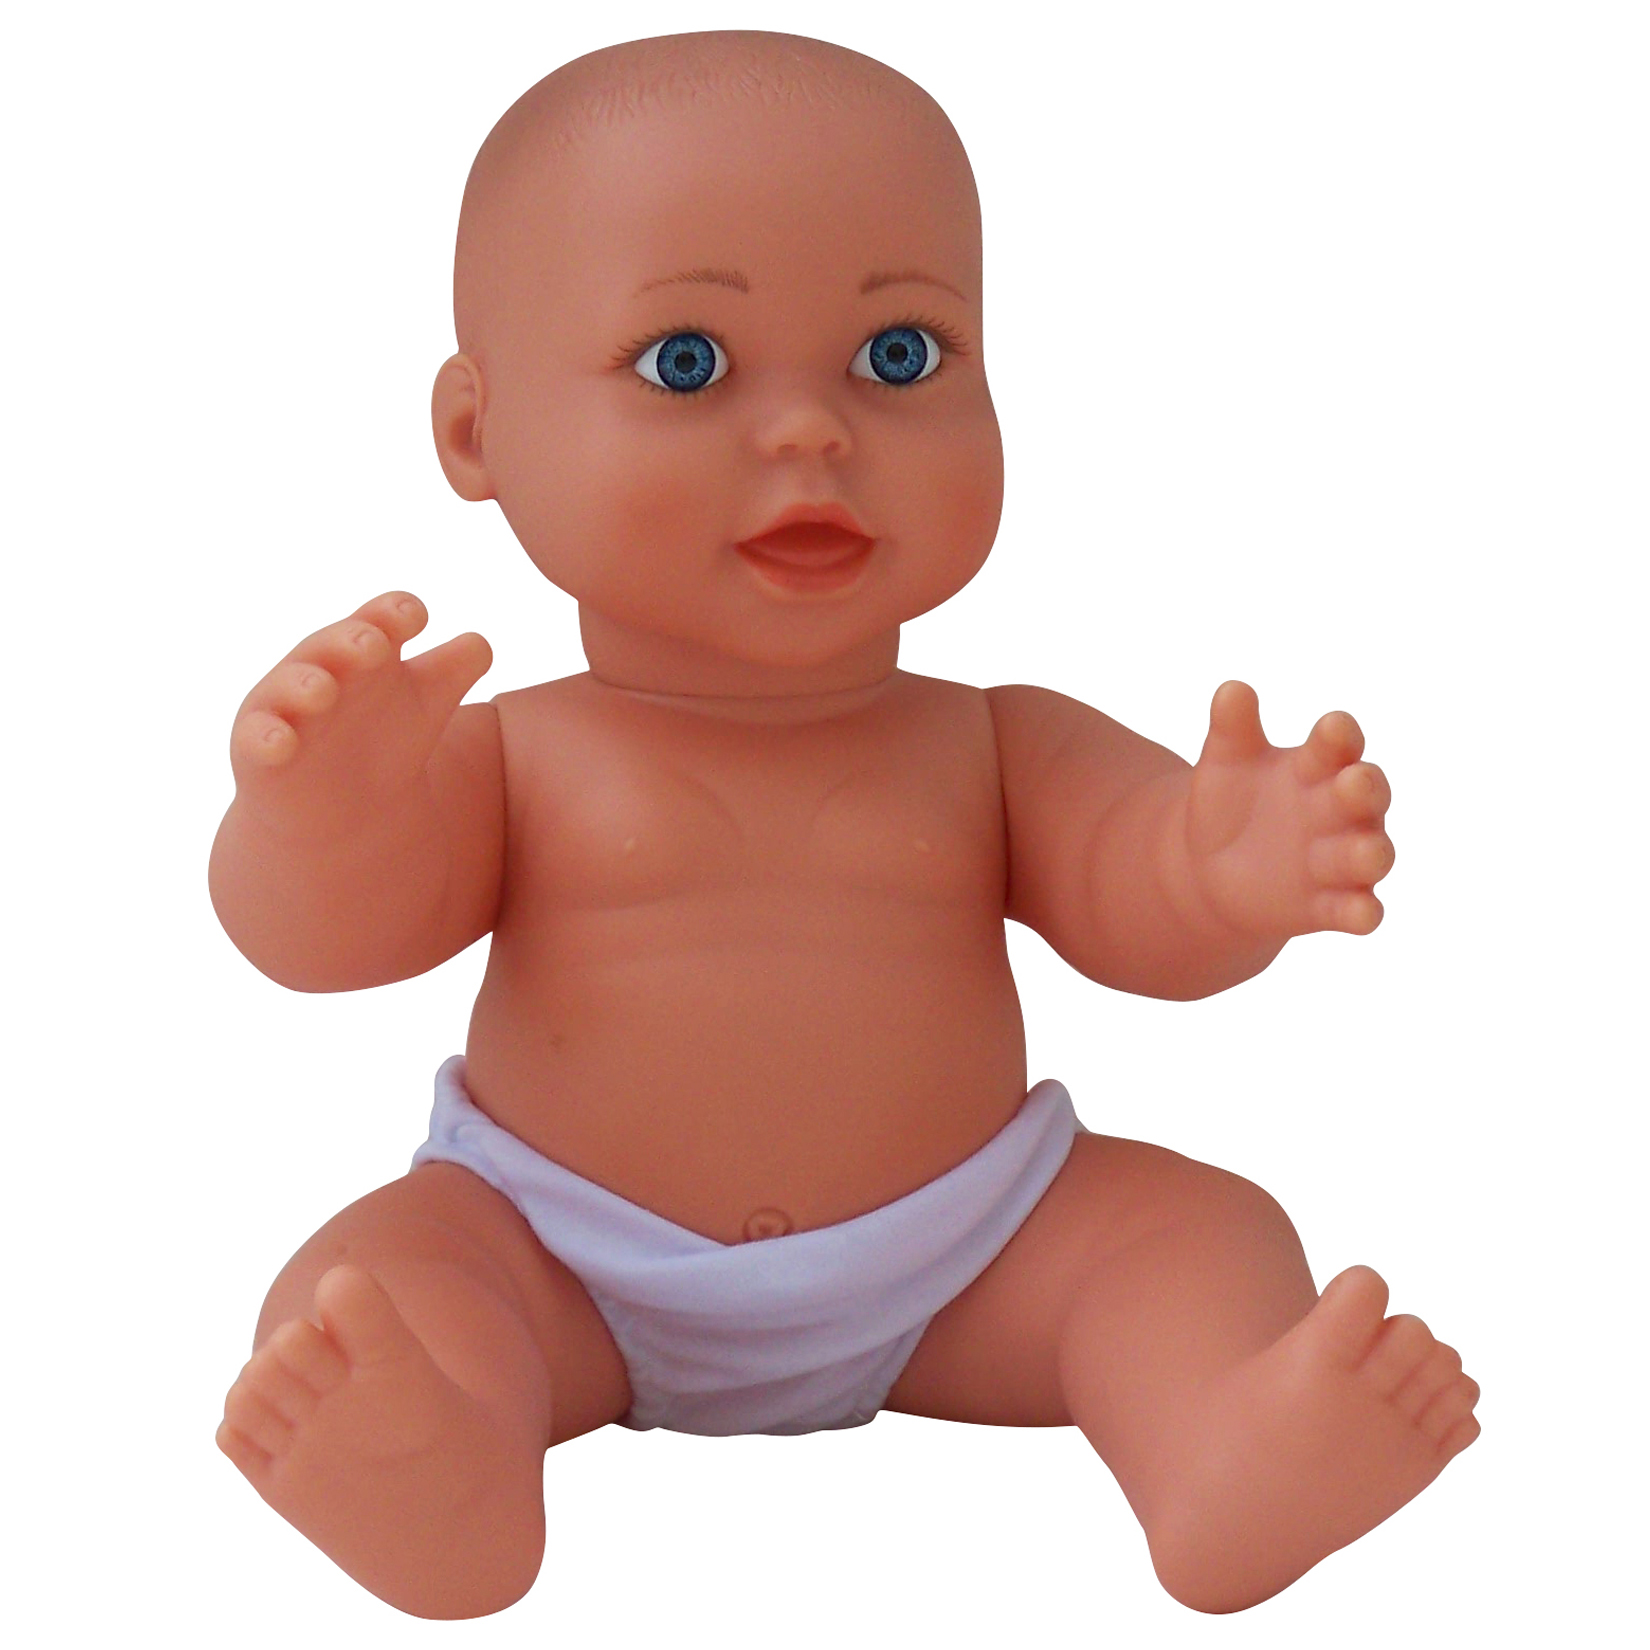 Get Ready Kids Large Vinyl Gender Neutral Caucasian Baby Doll